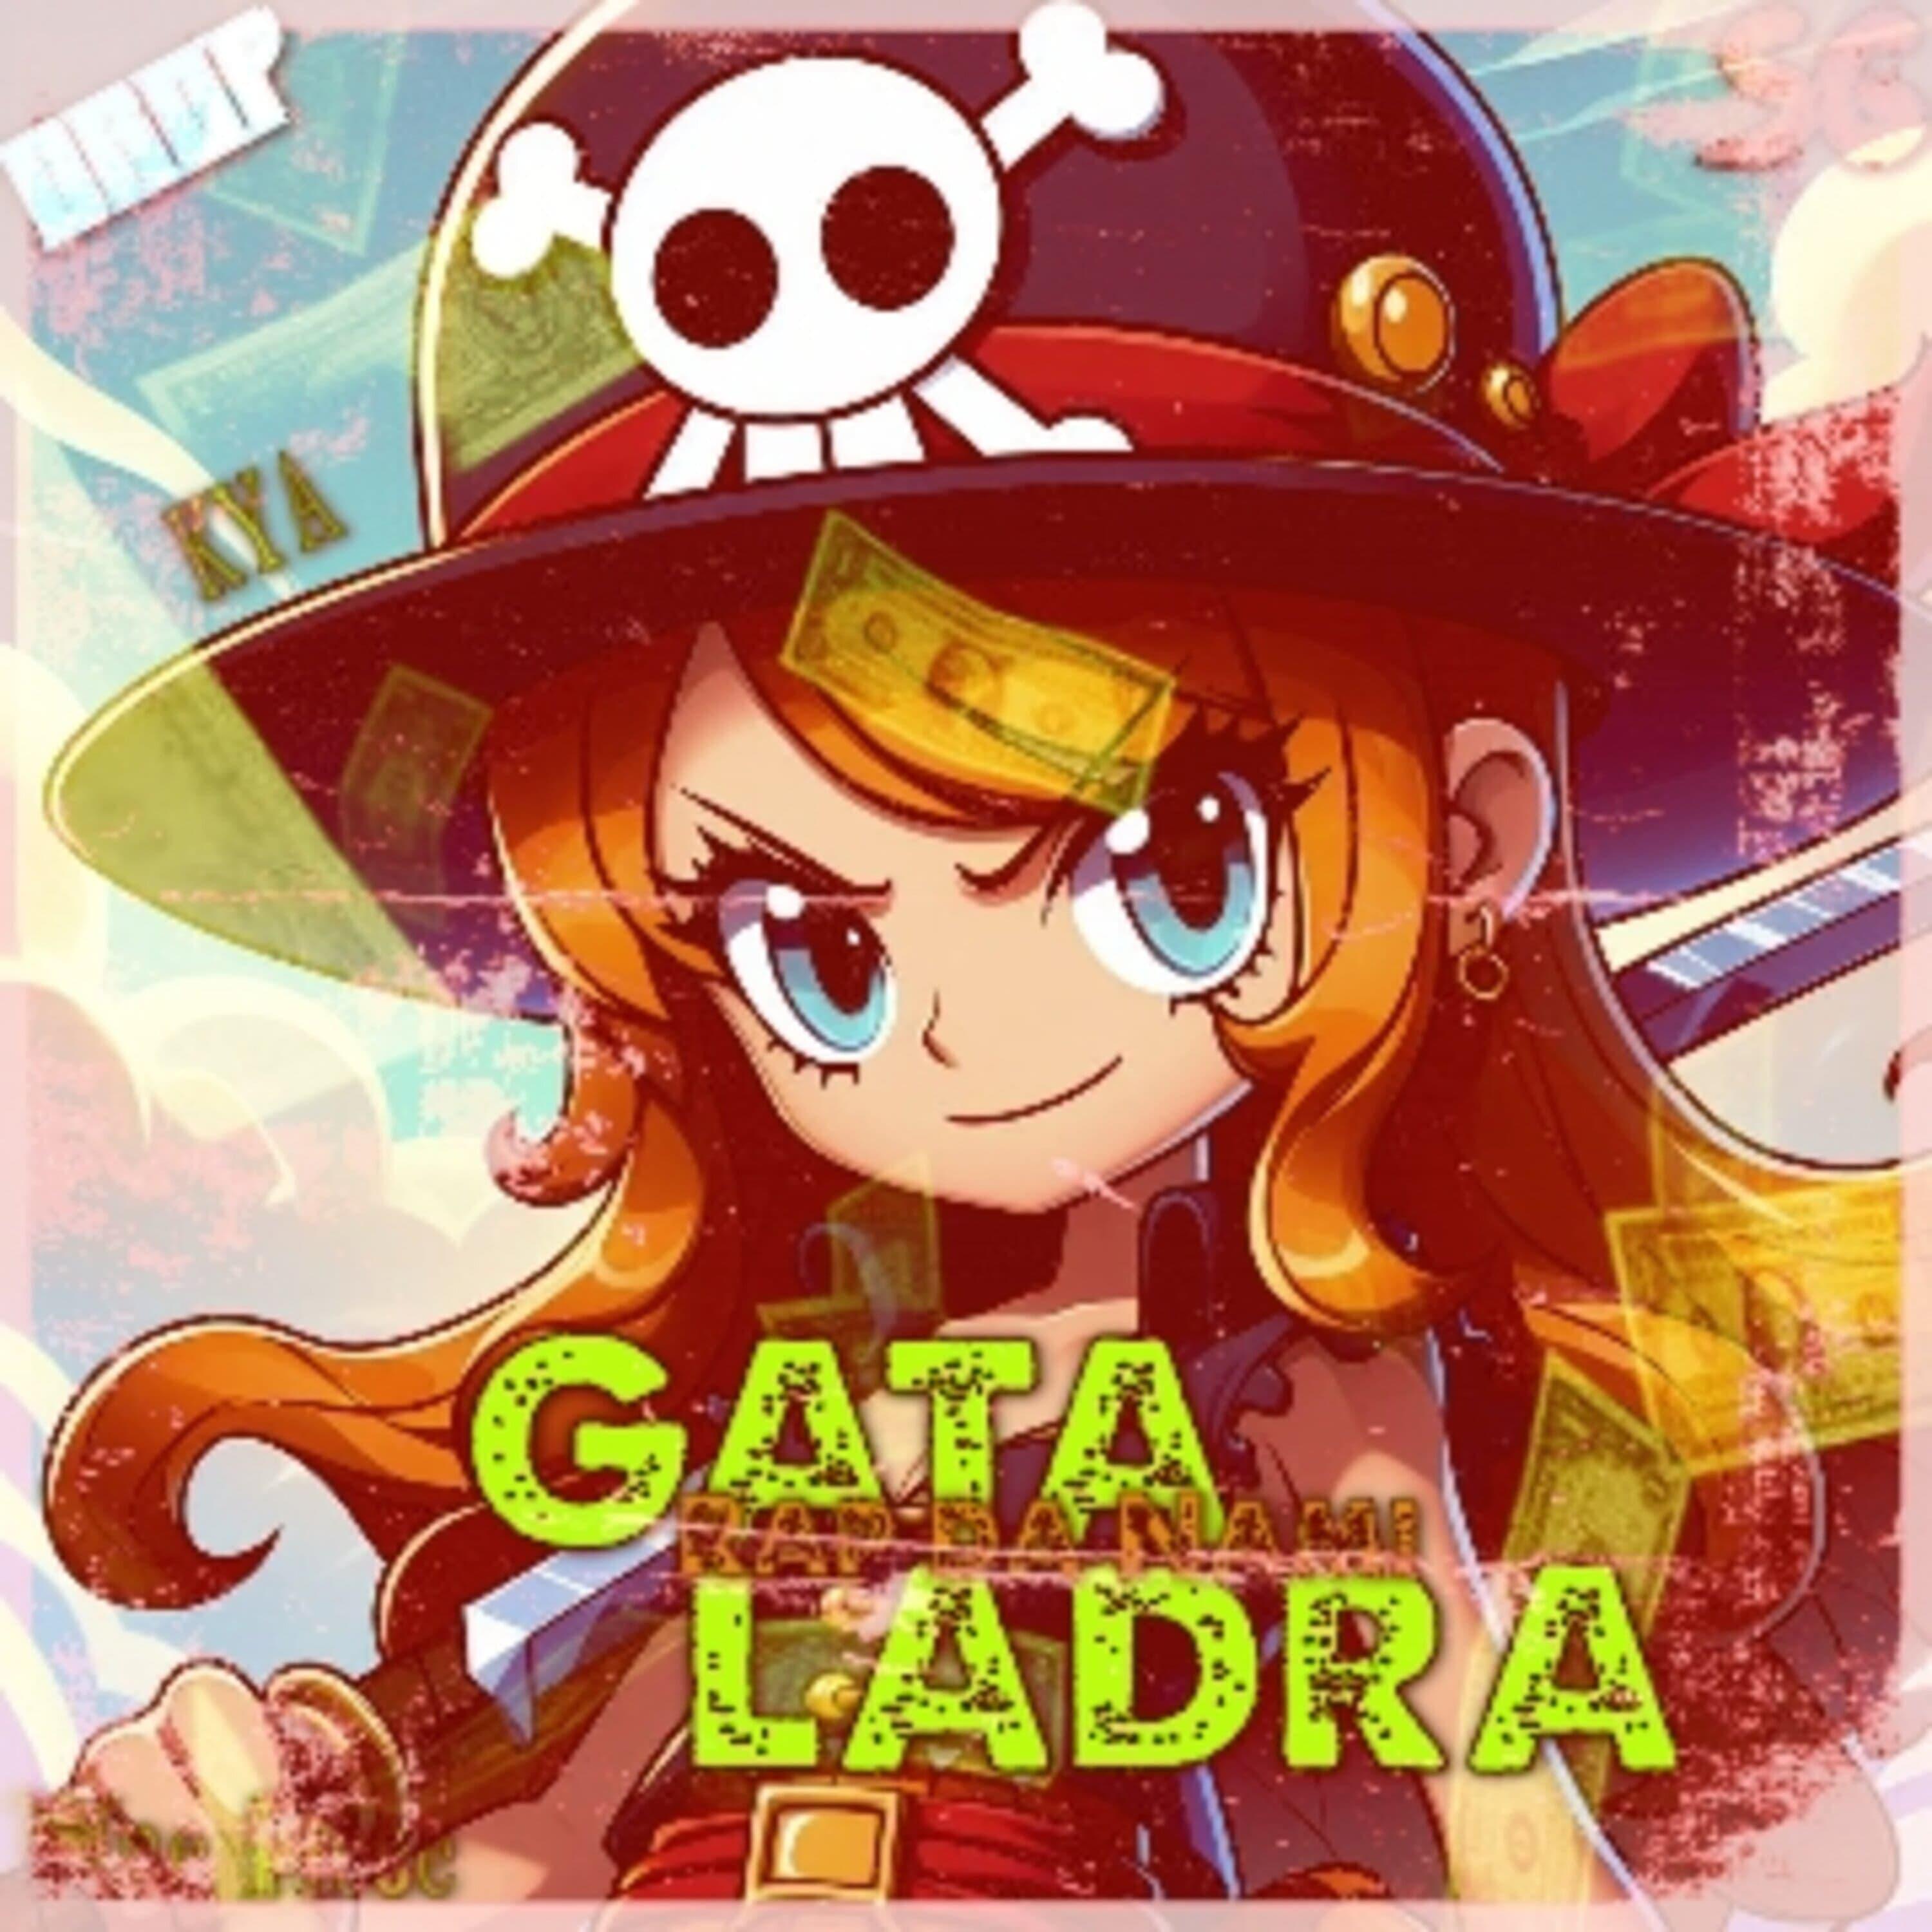 Постер альбома Gata Ladra